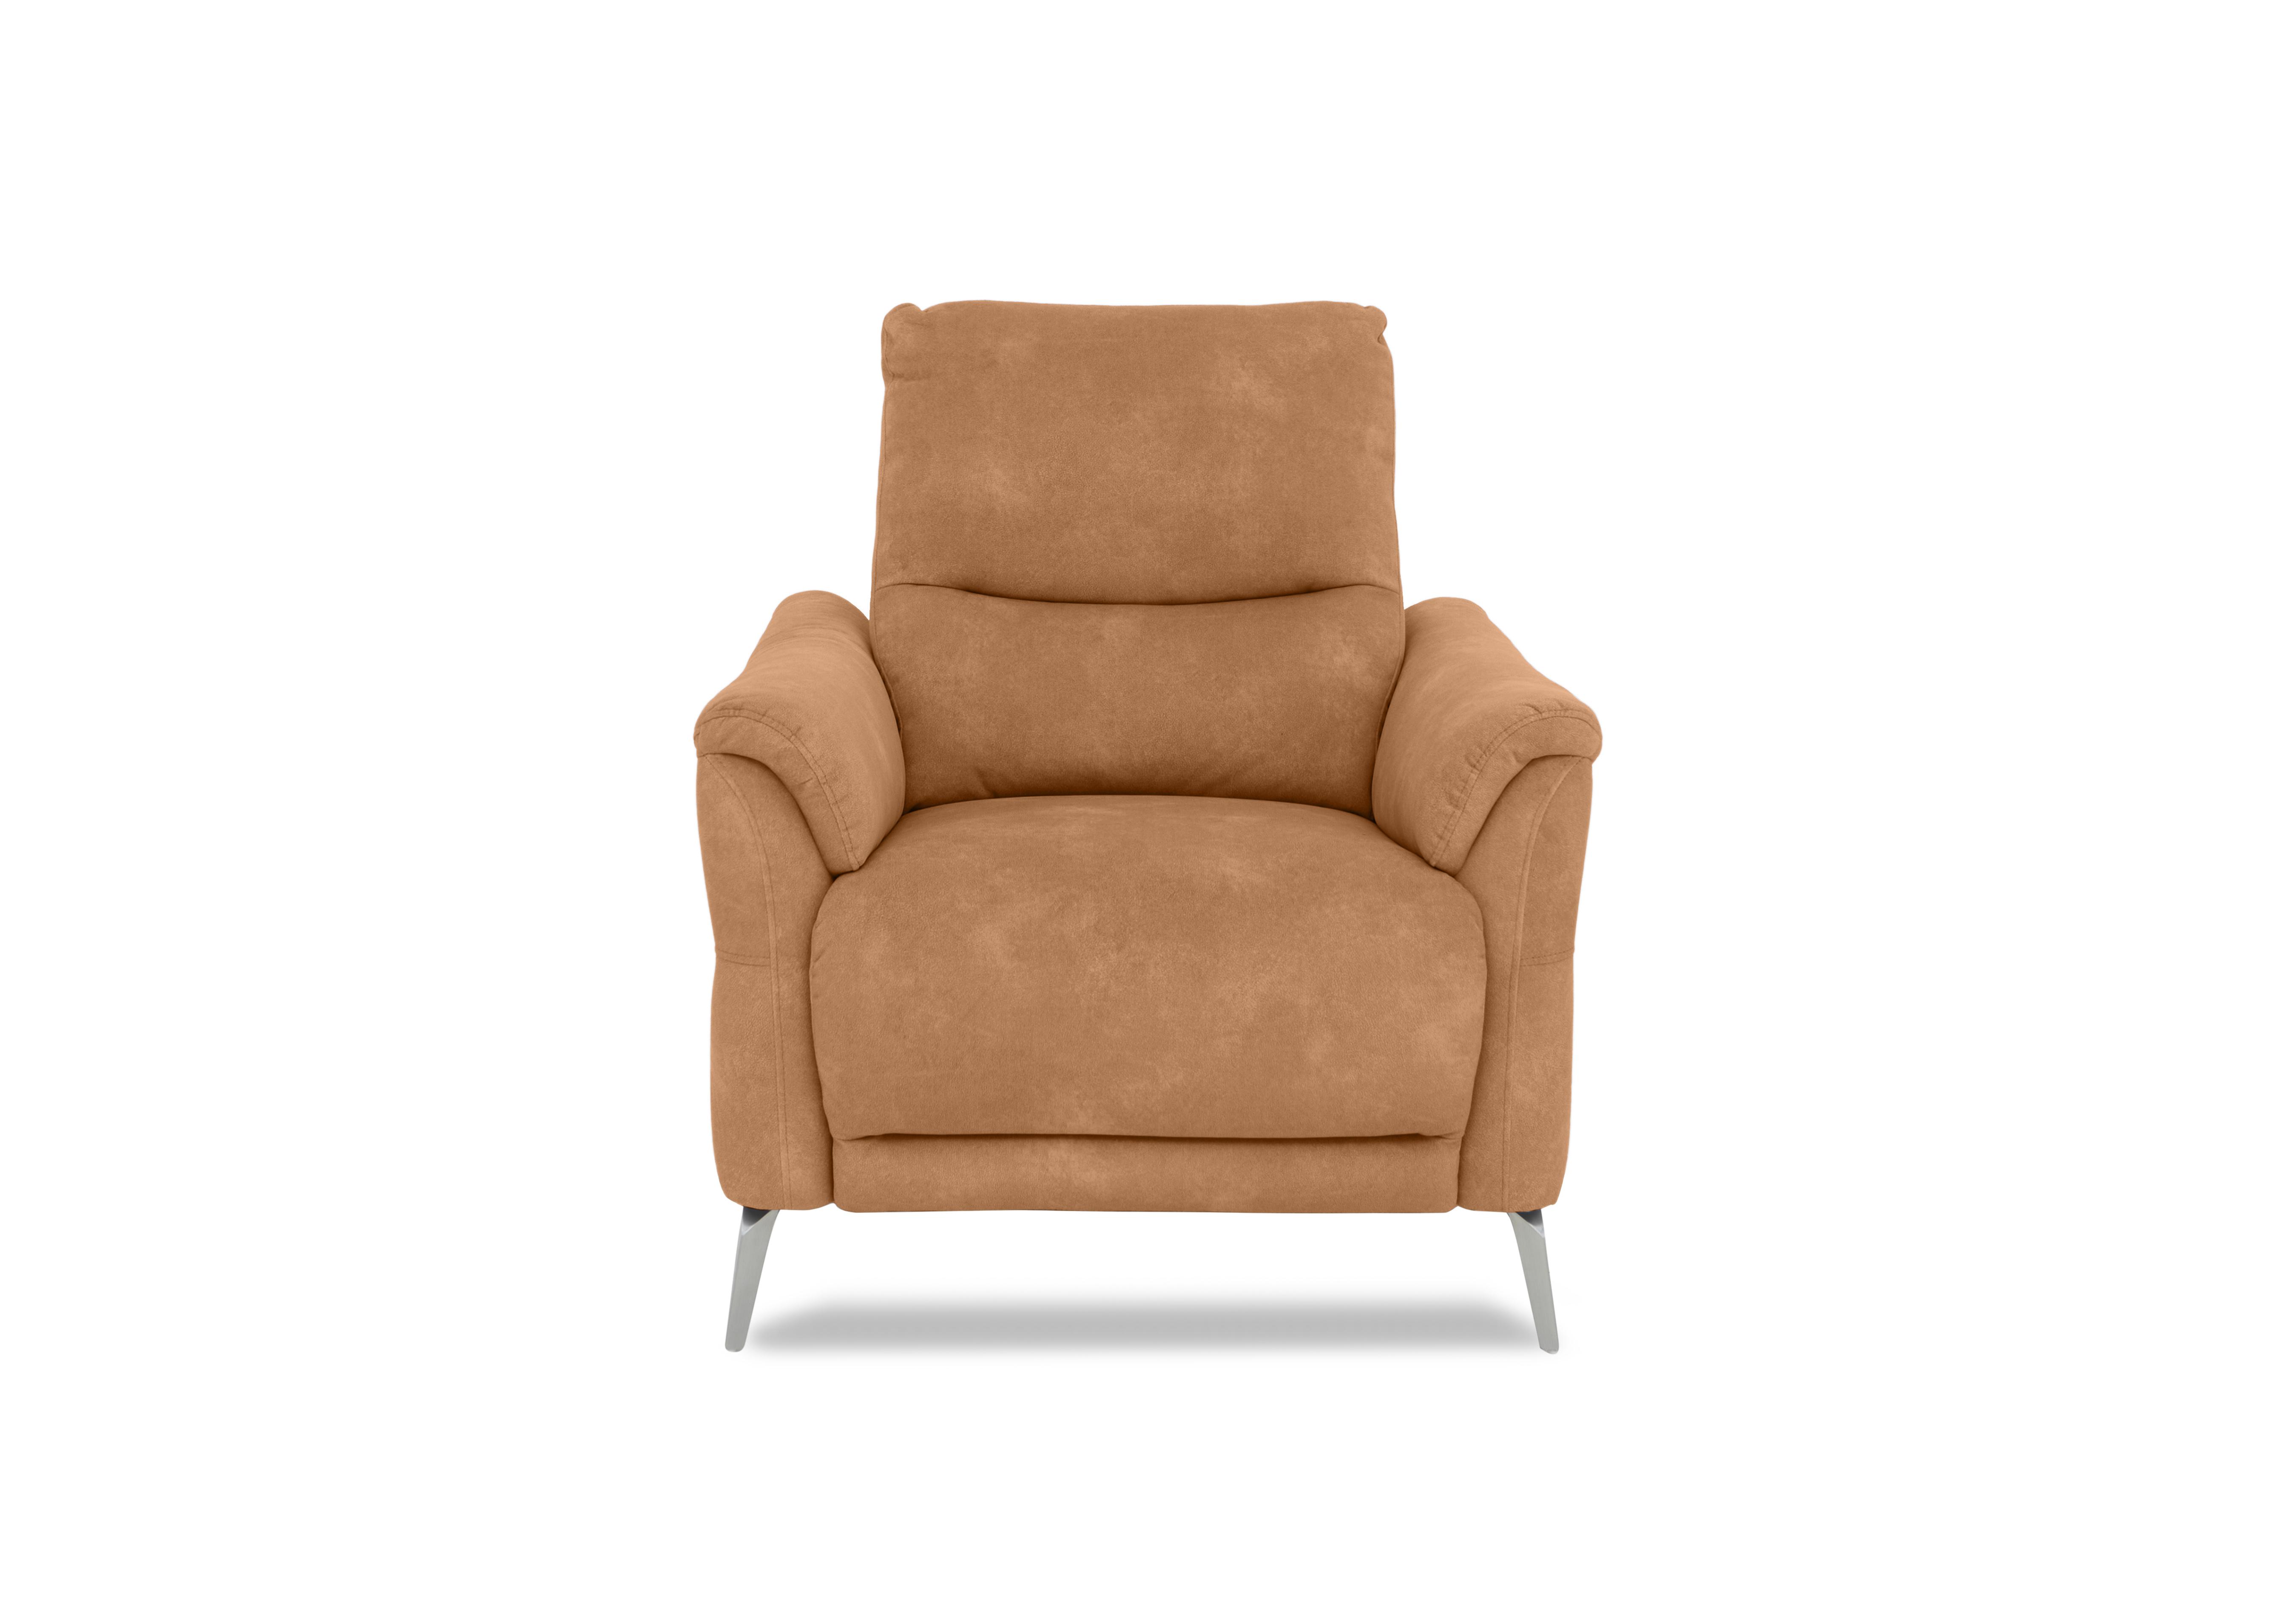 Daytona Fabric Chair in 43509 Dexter Pumpkin on Furniture Village